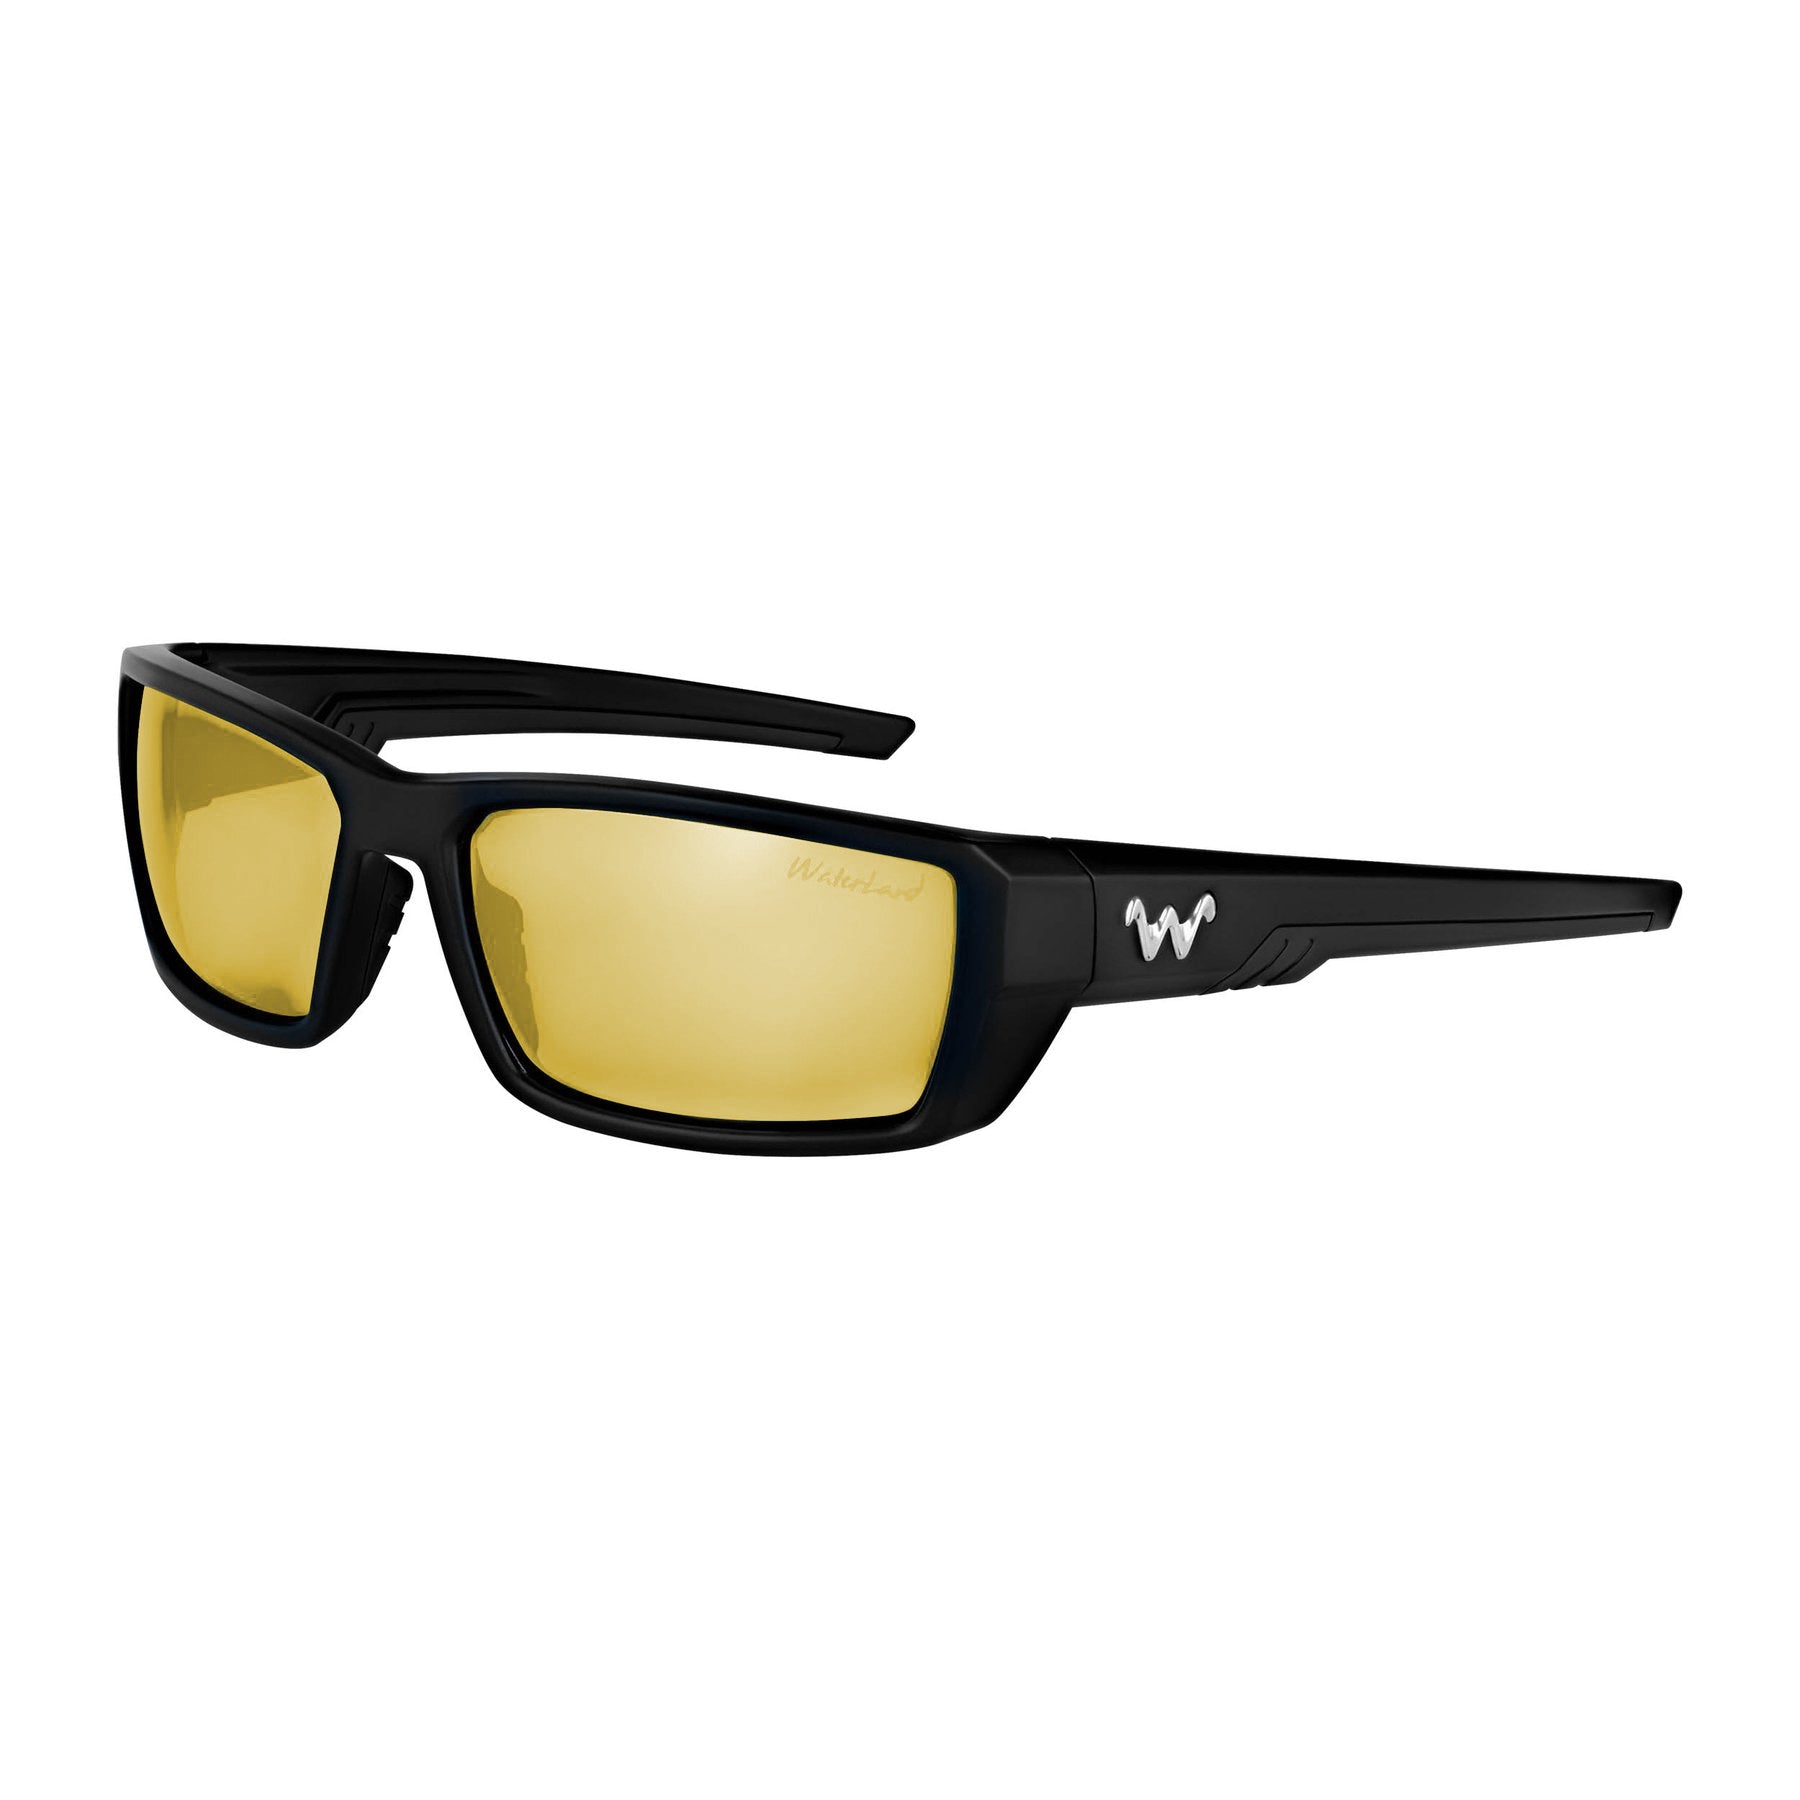 WaterLand Polarized Sunglasses - Ashor Series - Matte Black